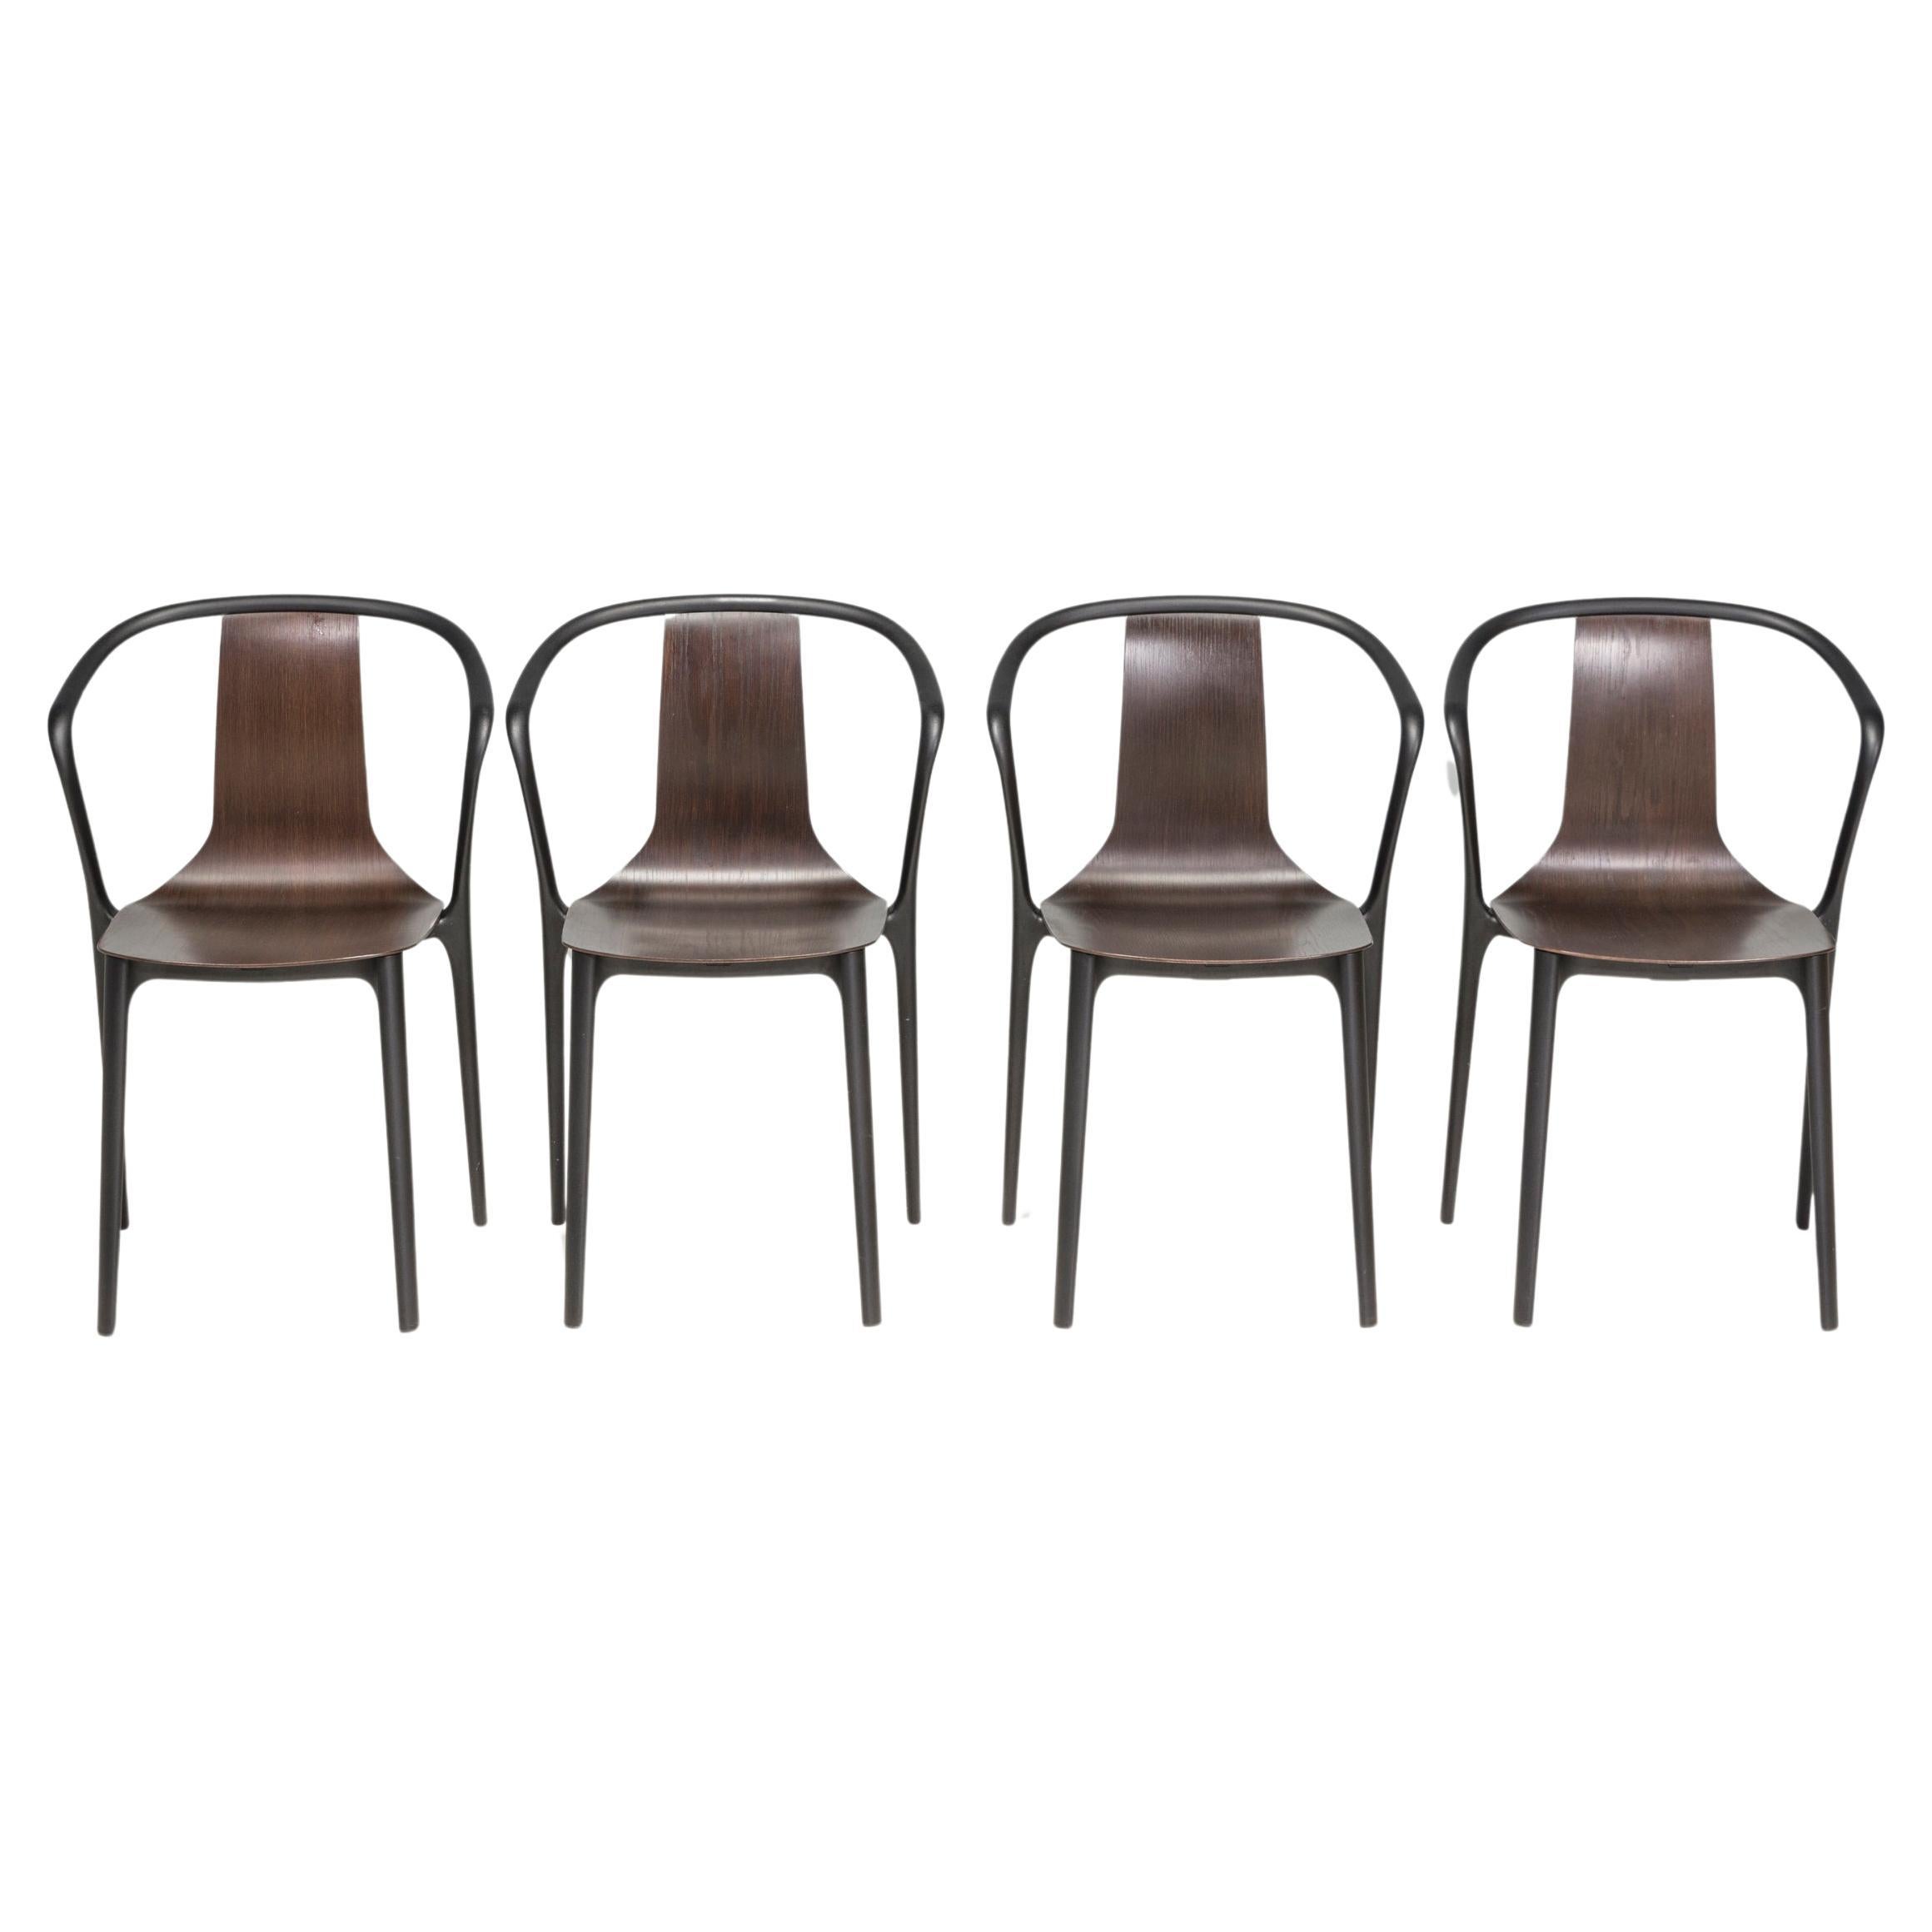 Ronan & Erwan Bouroullec for Vitra Dark Oak Belleville Dining Chairs, Set of 4 For Sale